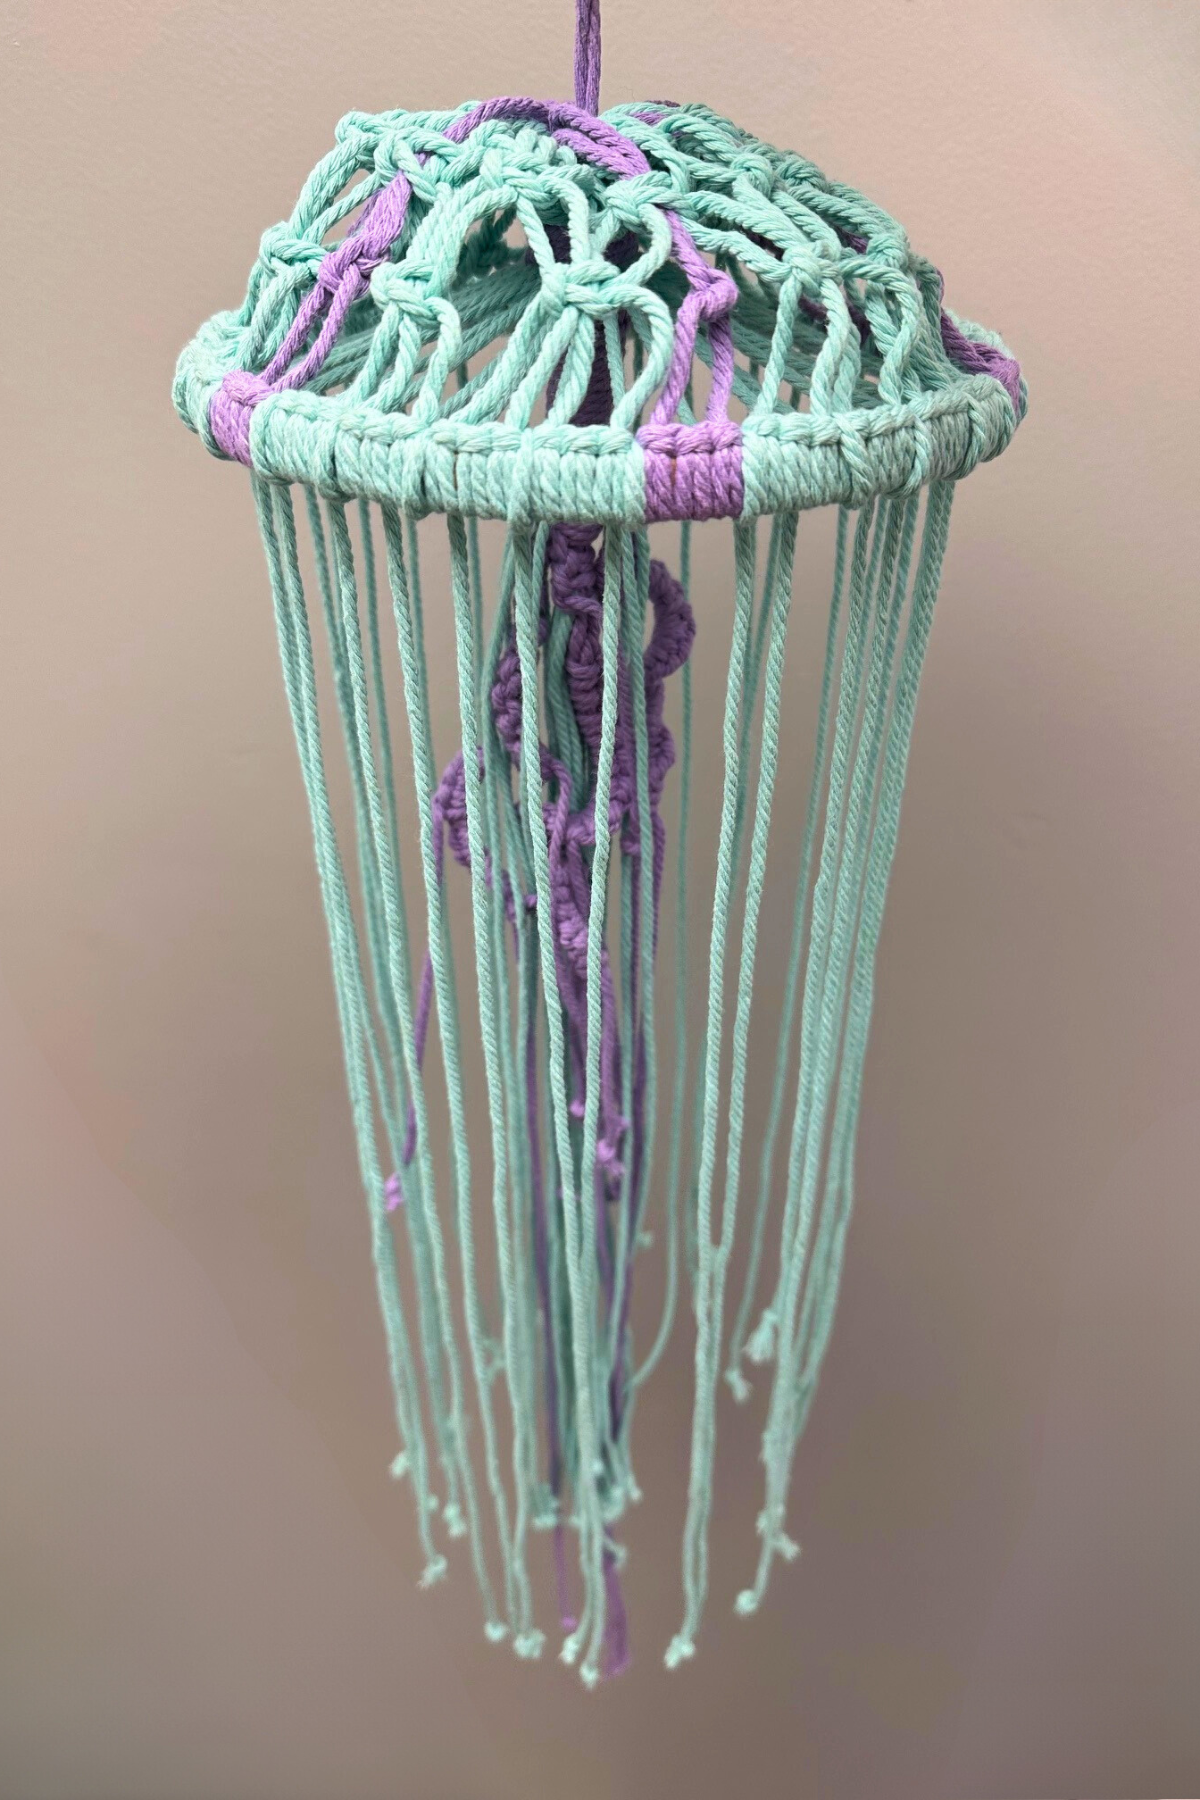 Macramé Jellyfish in "Blue Lagoon" by JLN Handmade